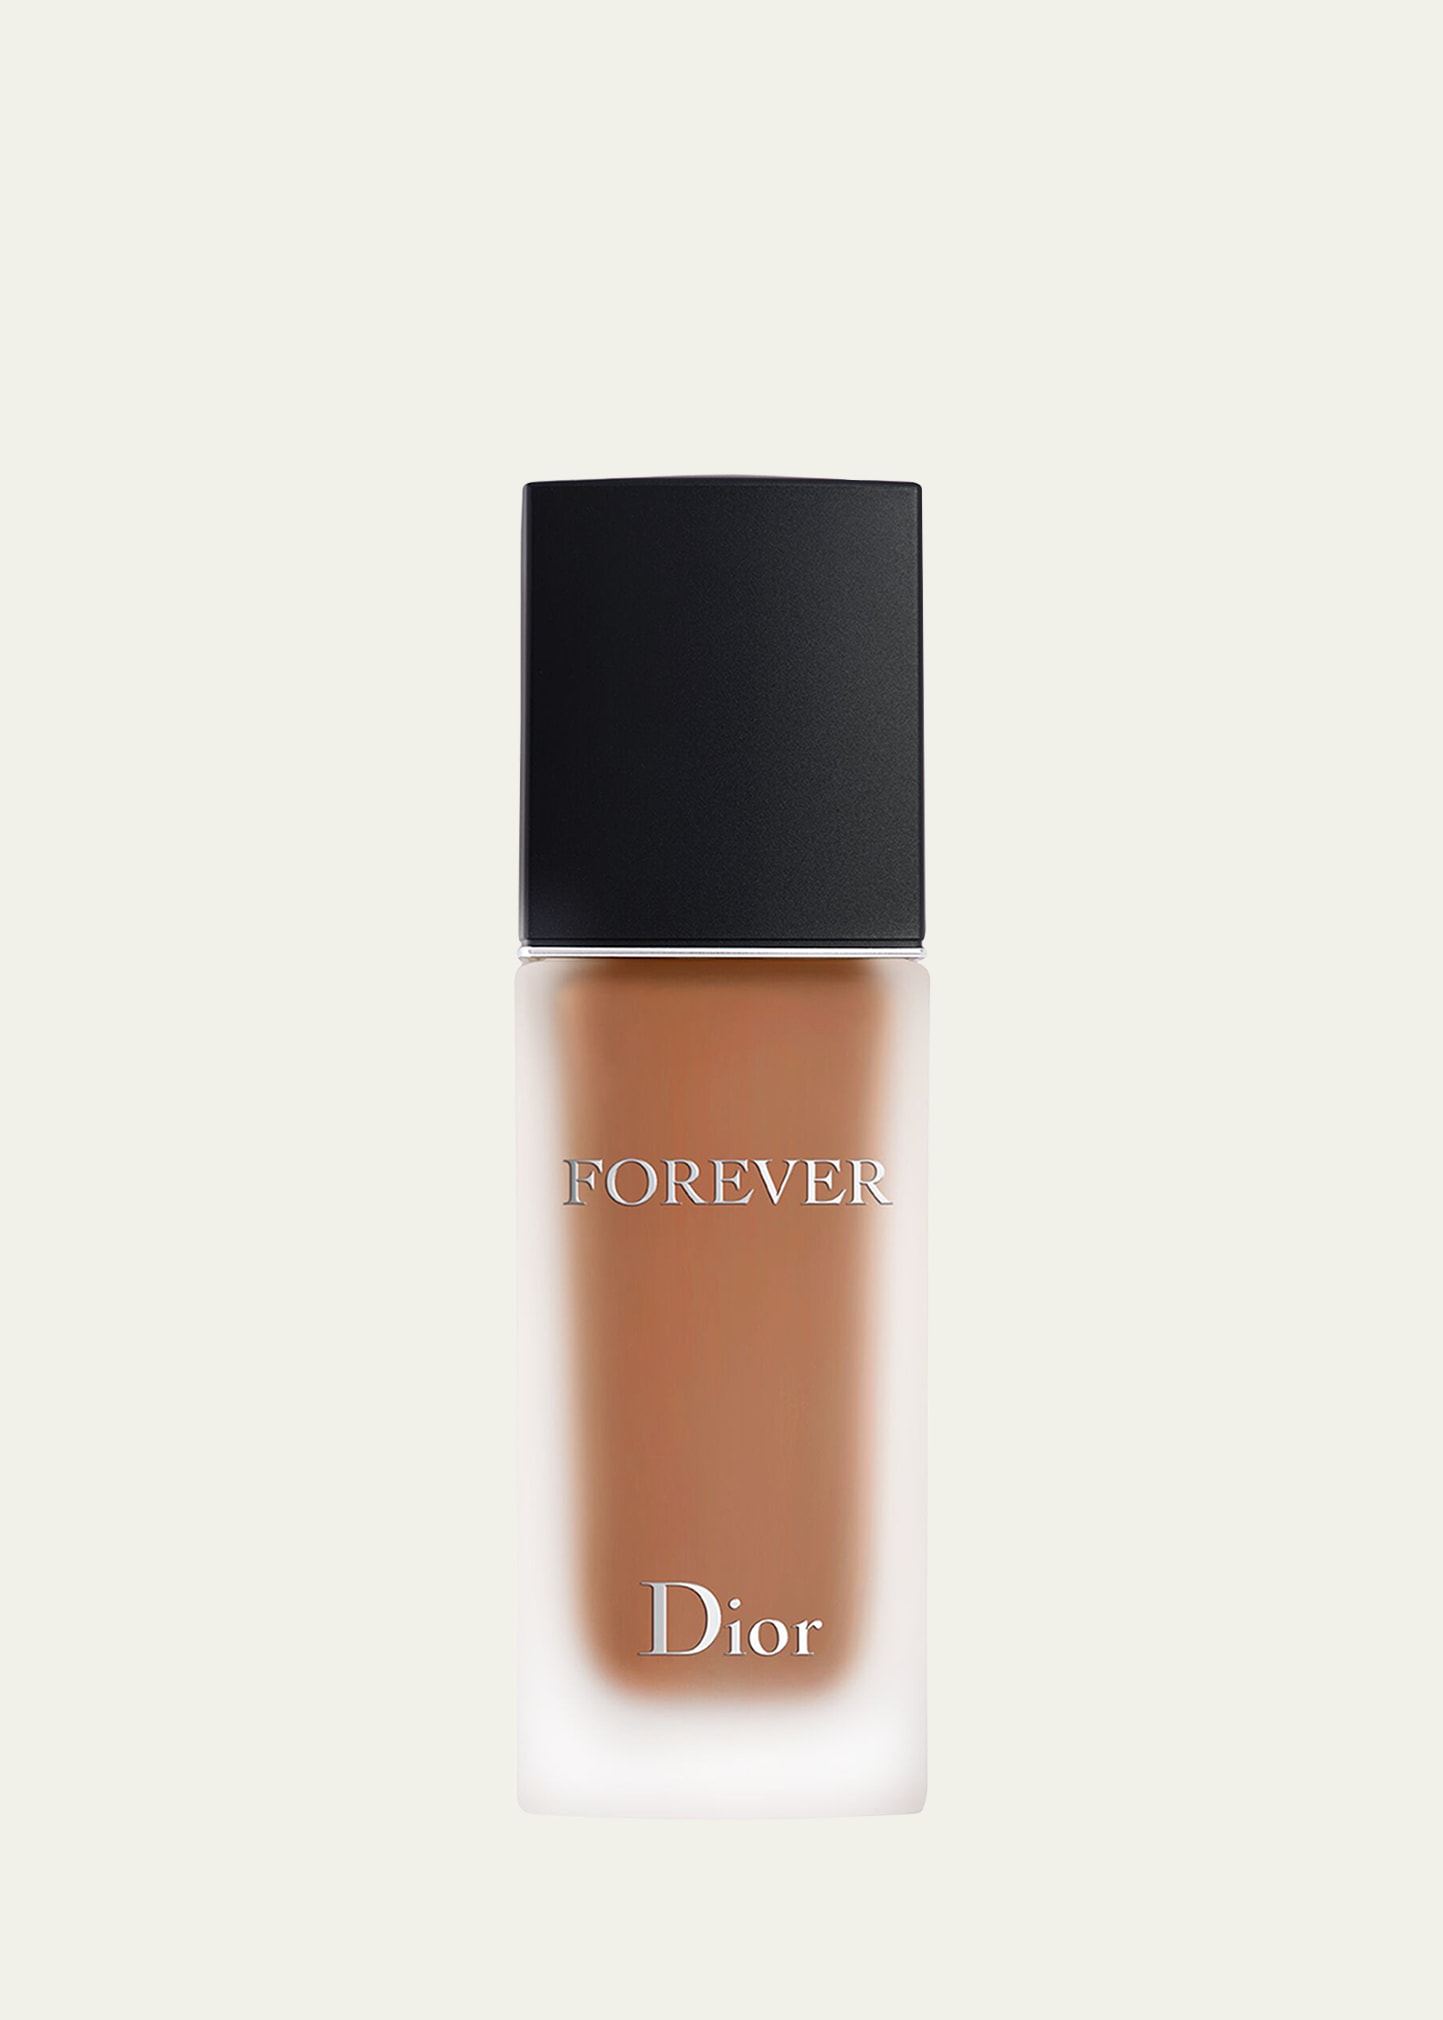 Dior 1 Oz. Forever Matte Skincare Foundation Spf 15 In 6 Neutral